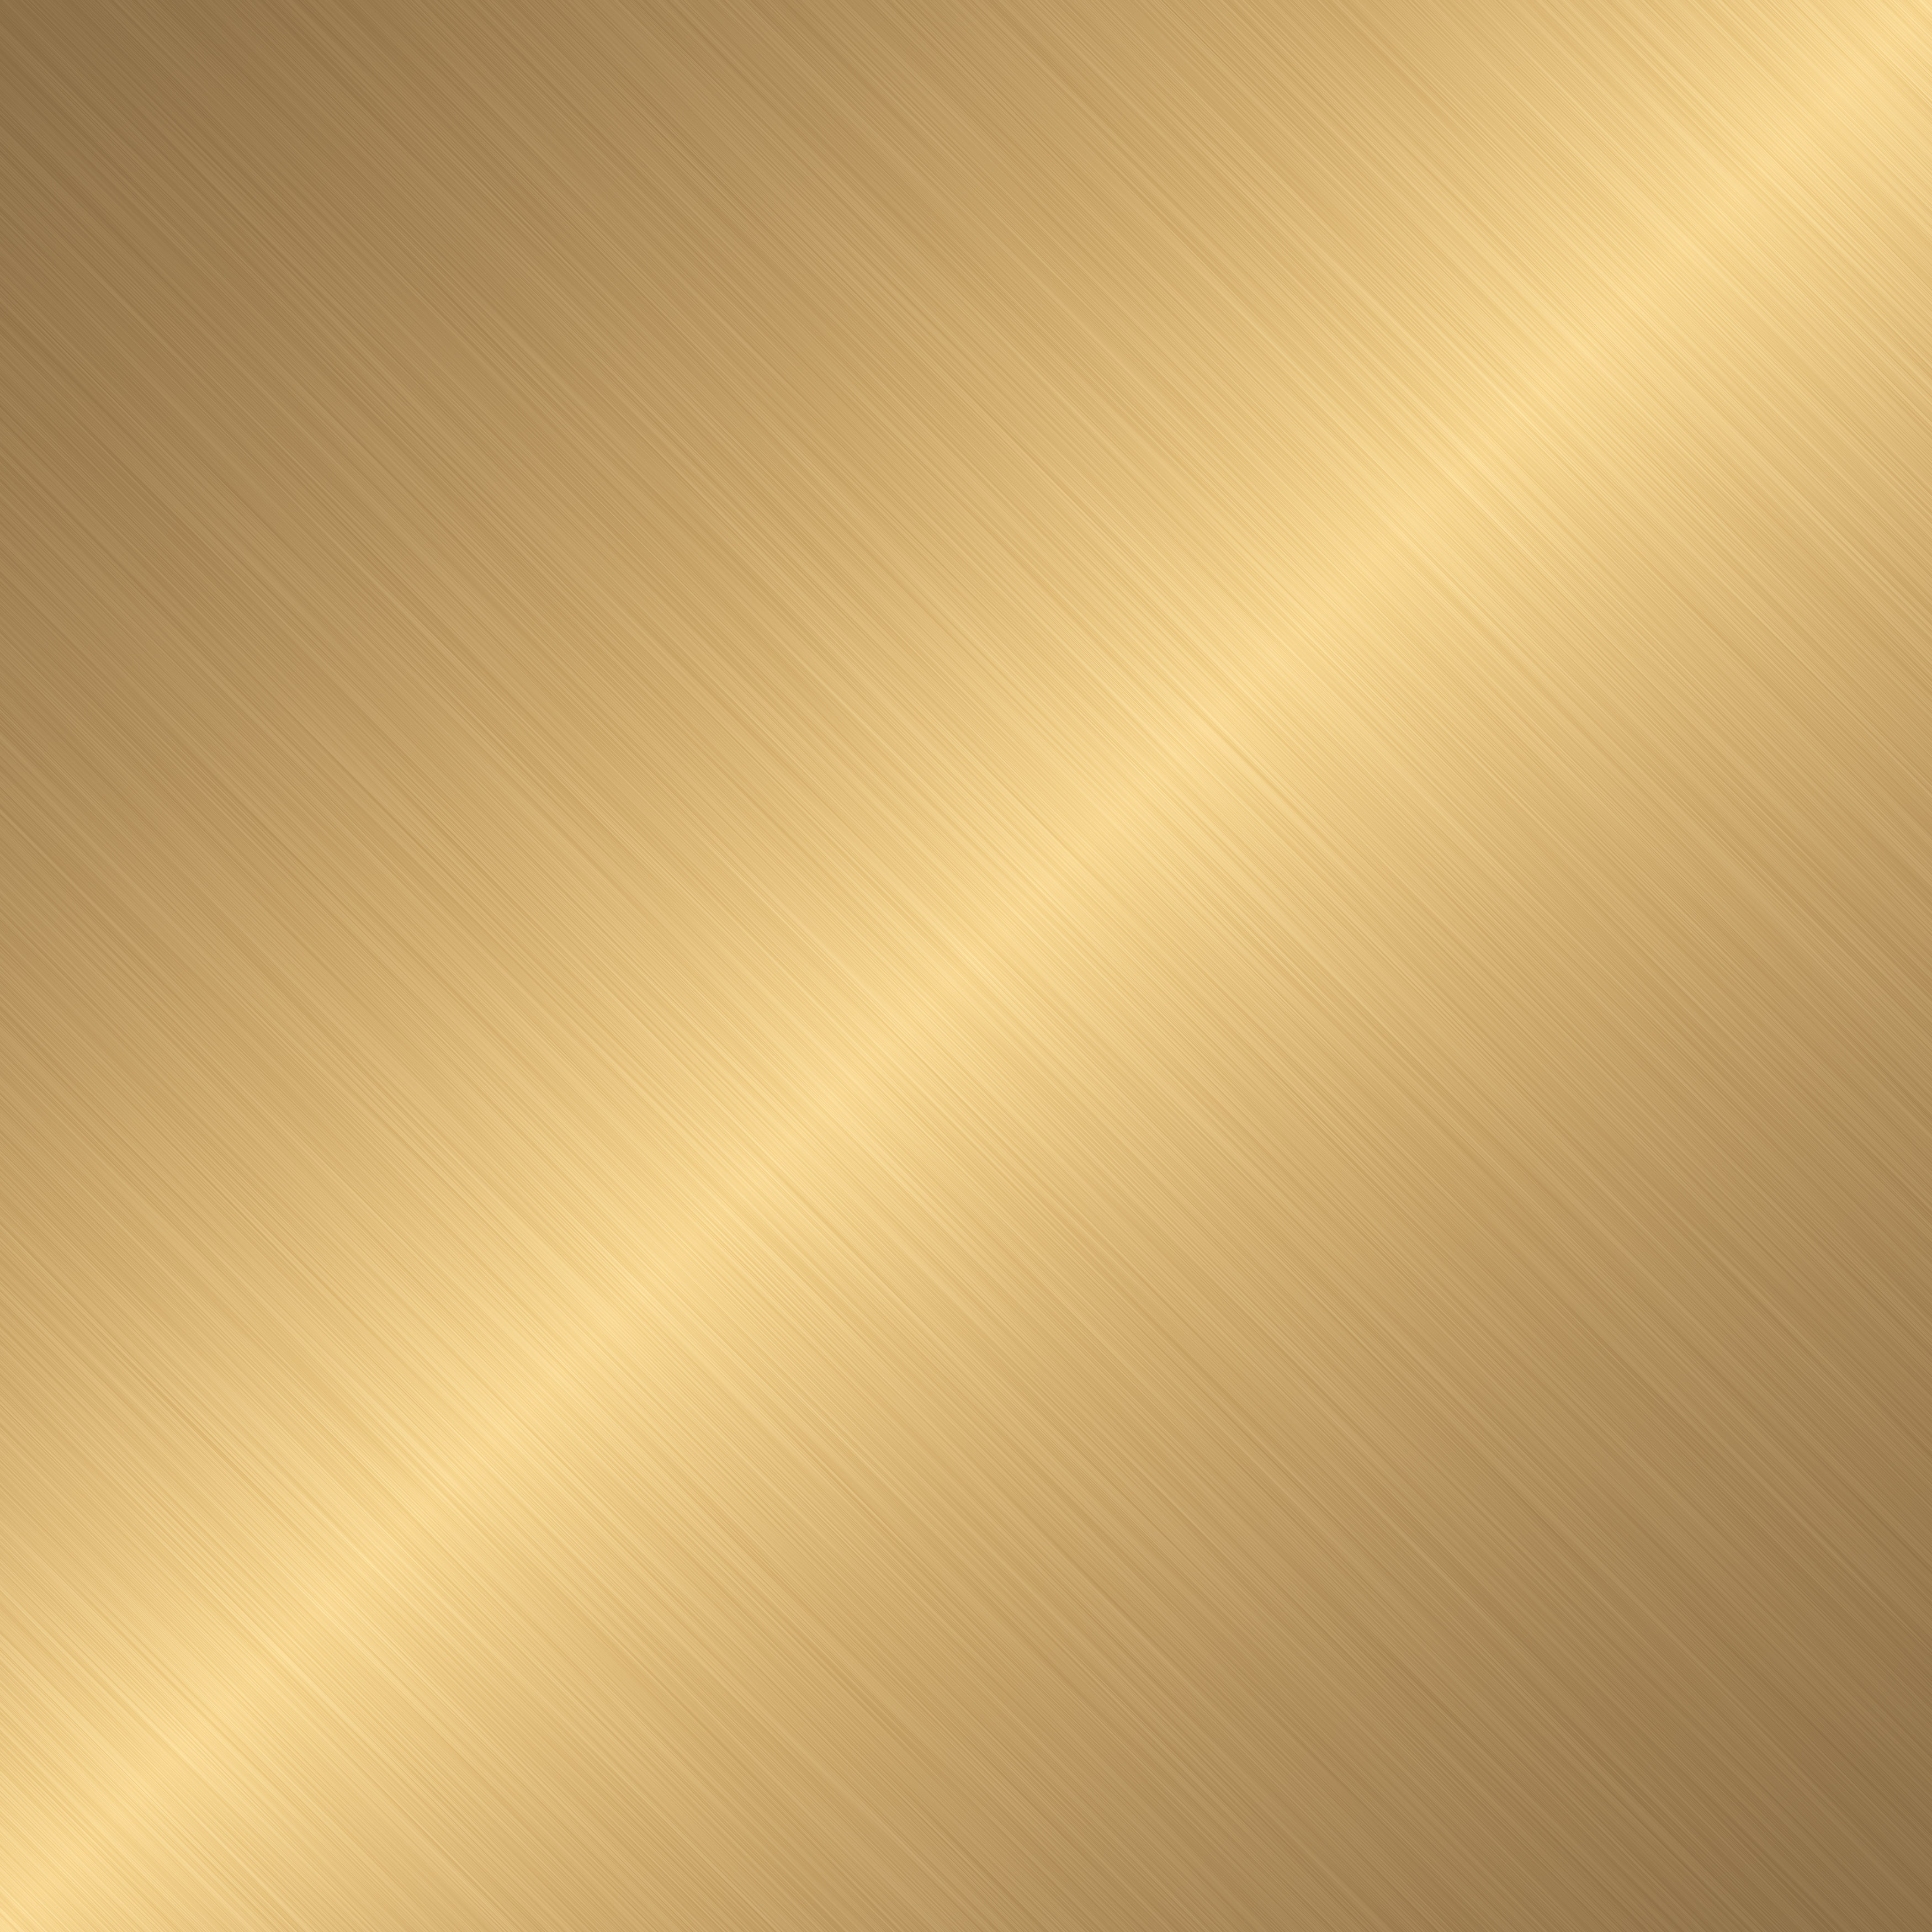 Brushed Gold Background